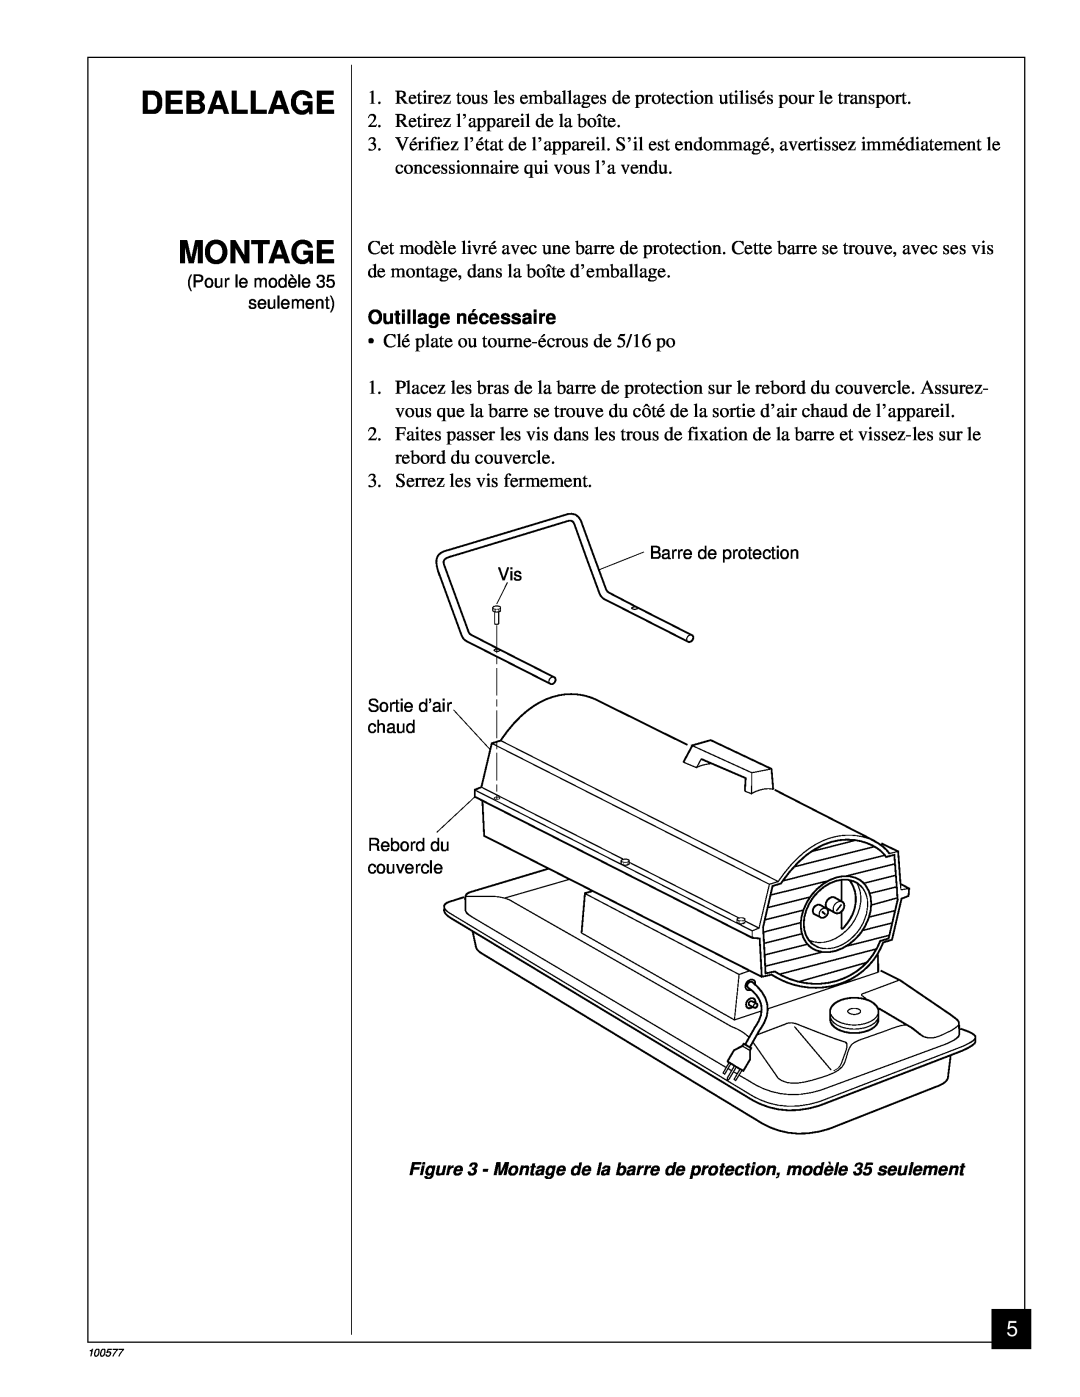 Homelite HHC100A, HHC35A, HHC150A owner manual Deballage Montage, Outillage né cessaire 